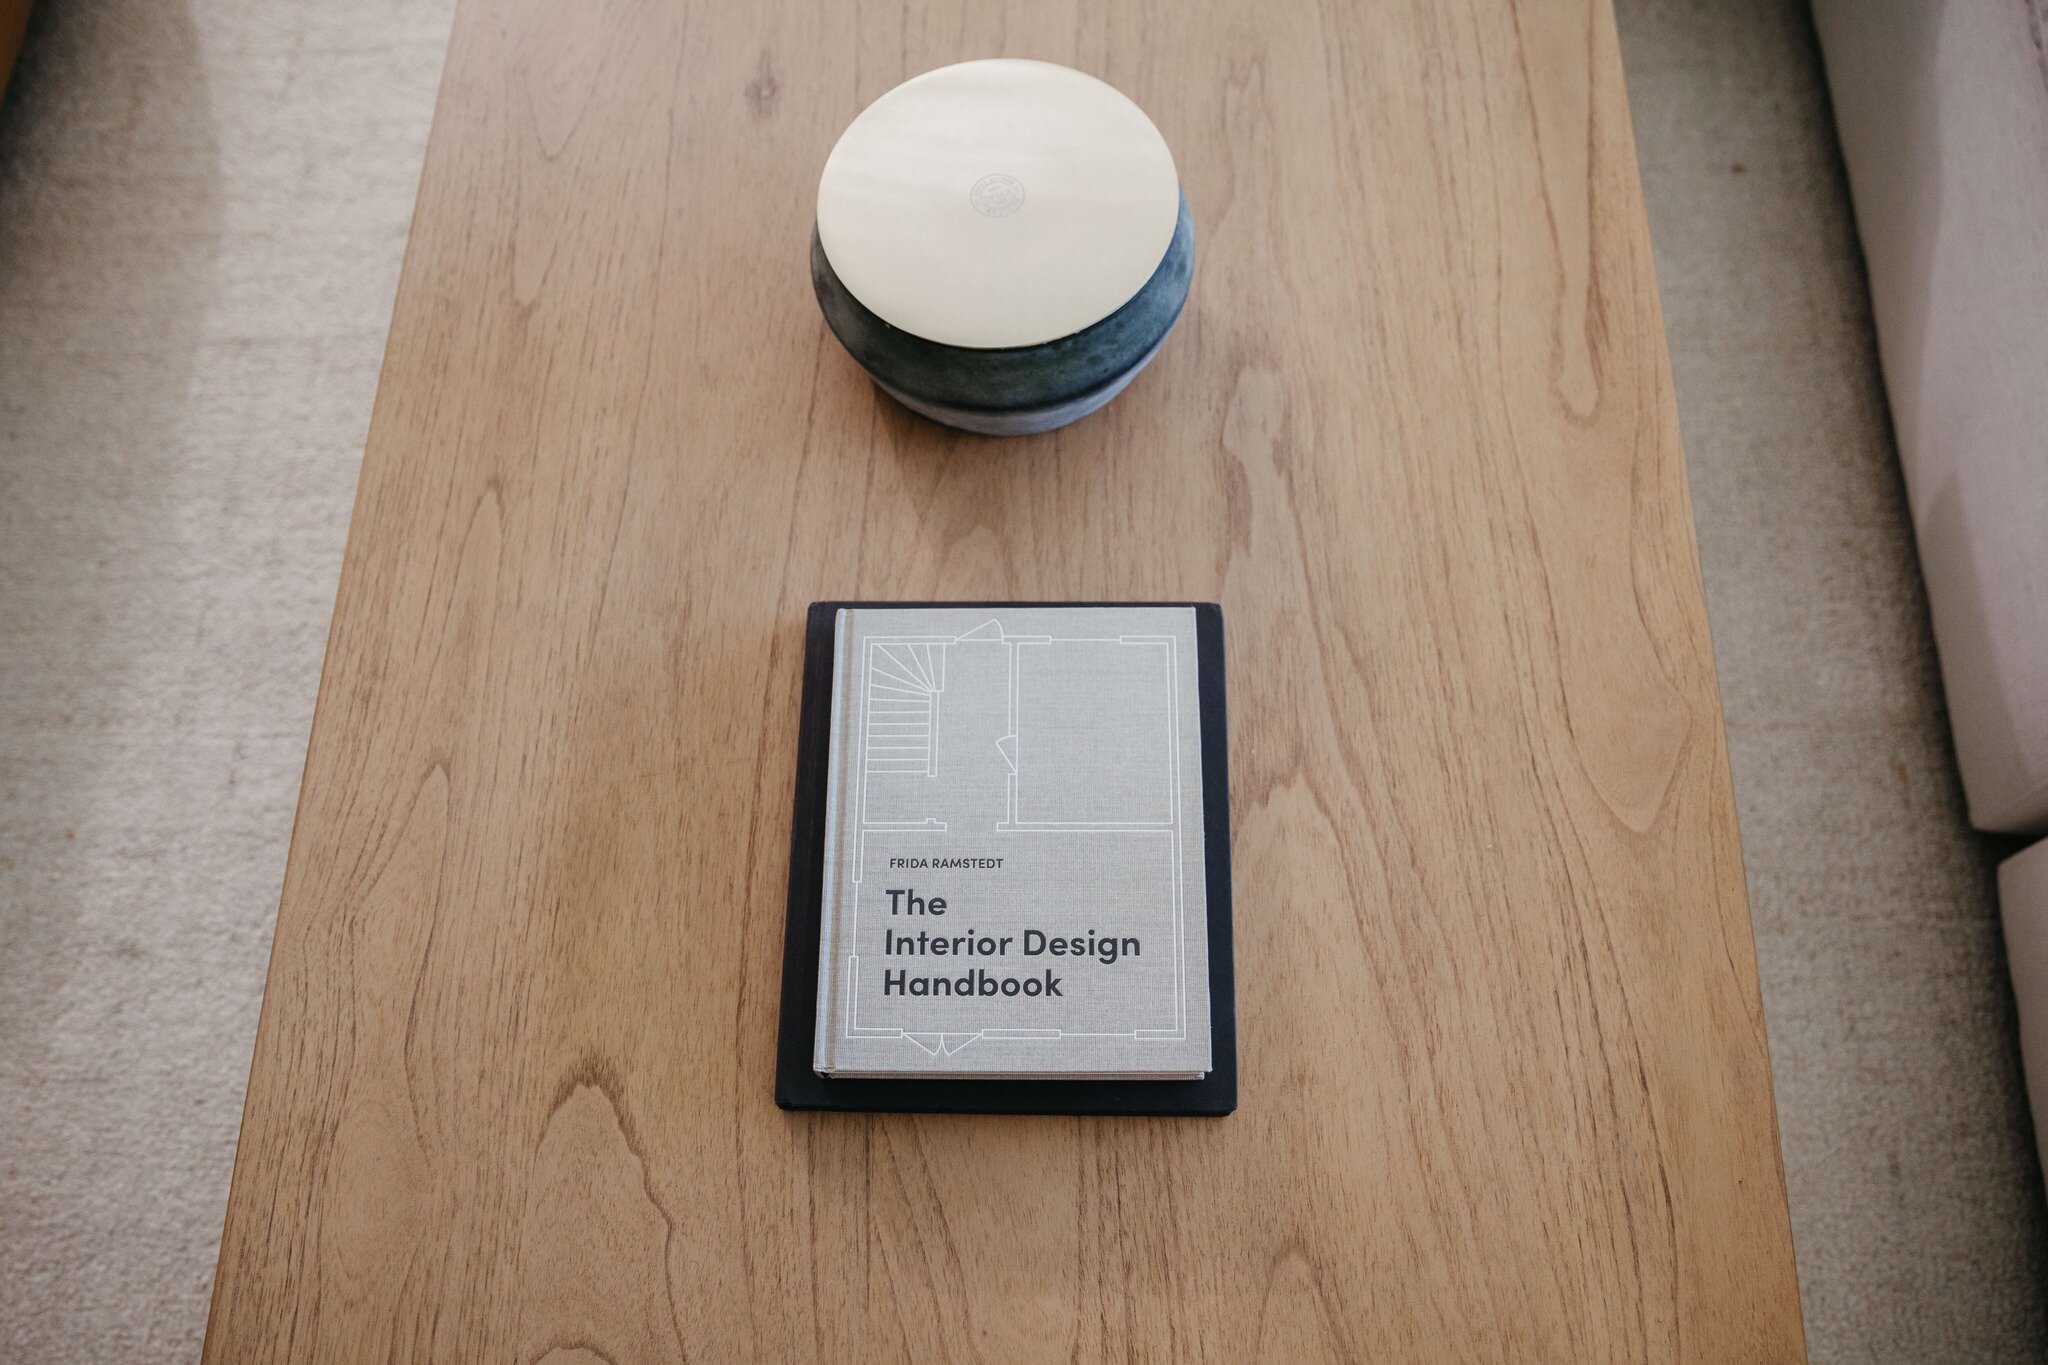 When less is more 🤍

.
.
.
.
#neutralhome #minimalistdecor #minimaldecor #coffeetablebook #simpledecor